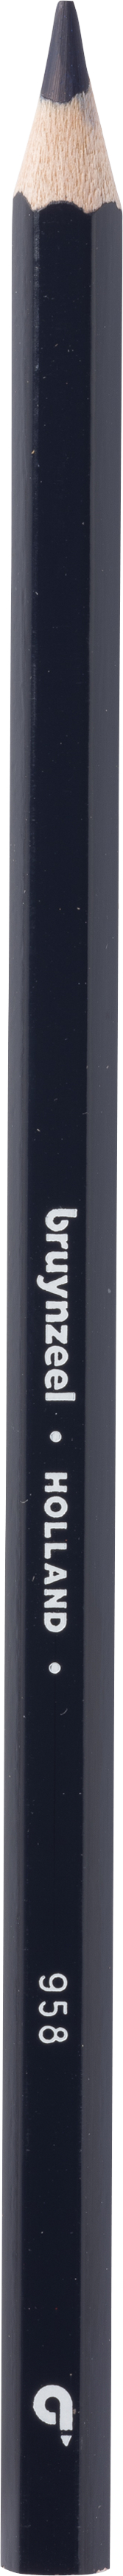 BRUYNZEEL Crayon de couleur Super 3.3mm 60516958 bleu foncé